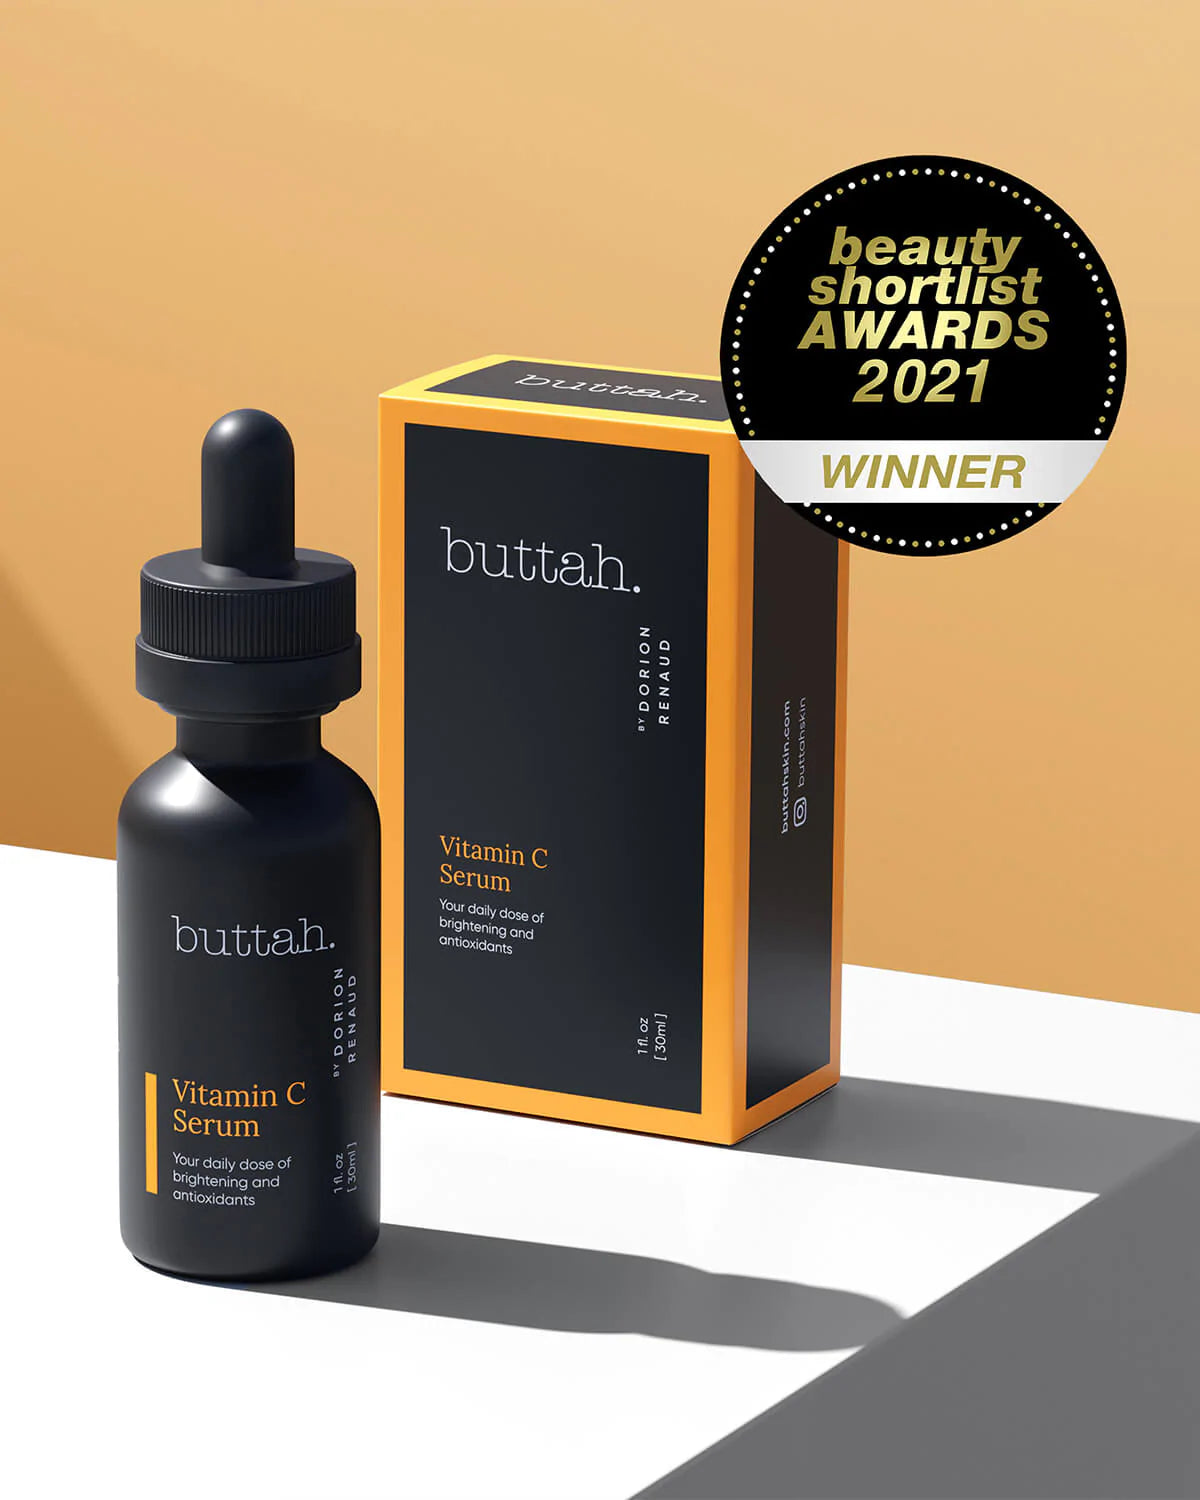 Vitamin C Serum for brightening and with antioxidants 2021 Beauty Shortlist Awards winner